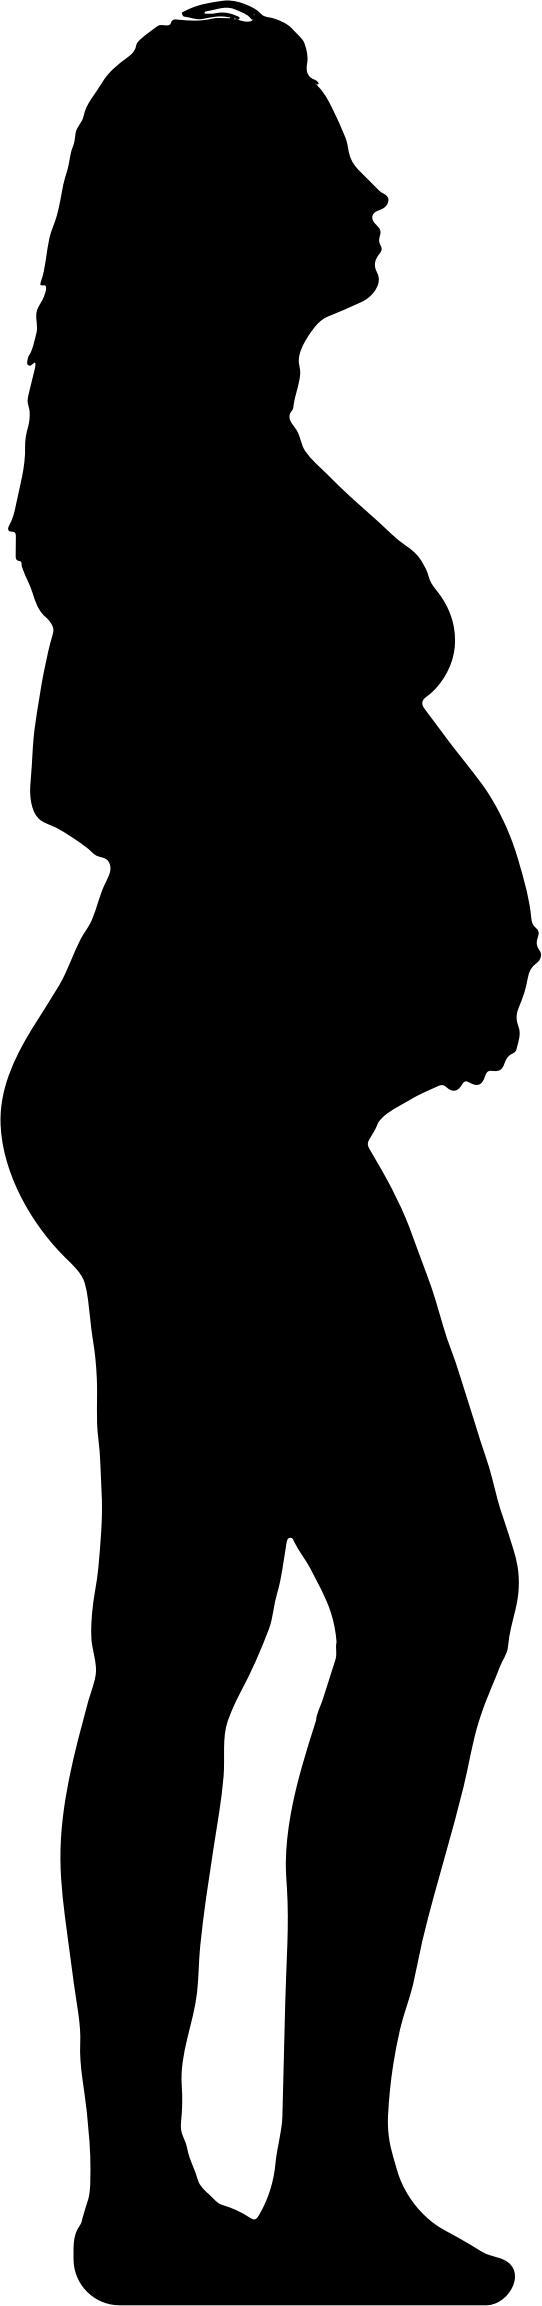 Pregnant Woman Clutching Abdomen Silhouette png transparent